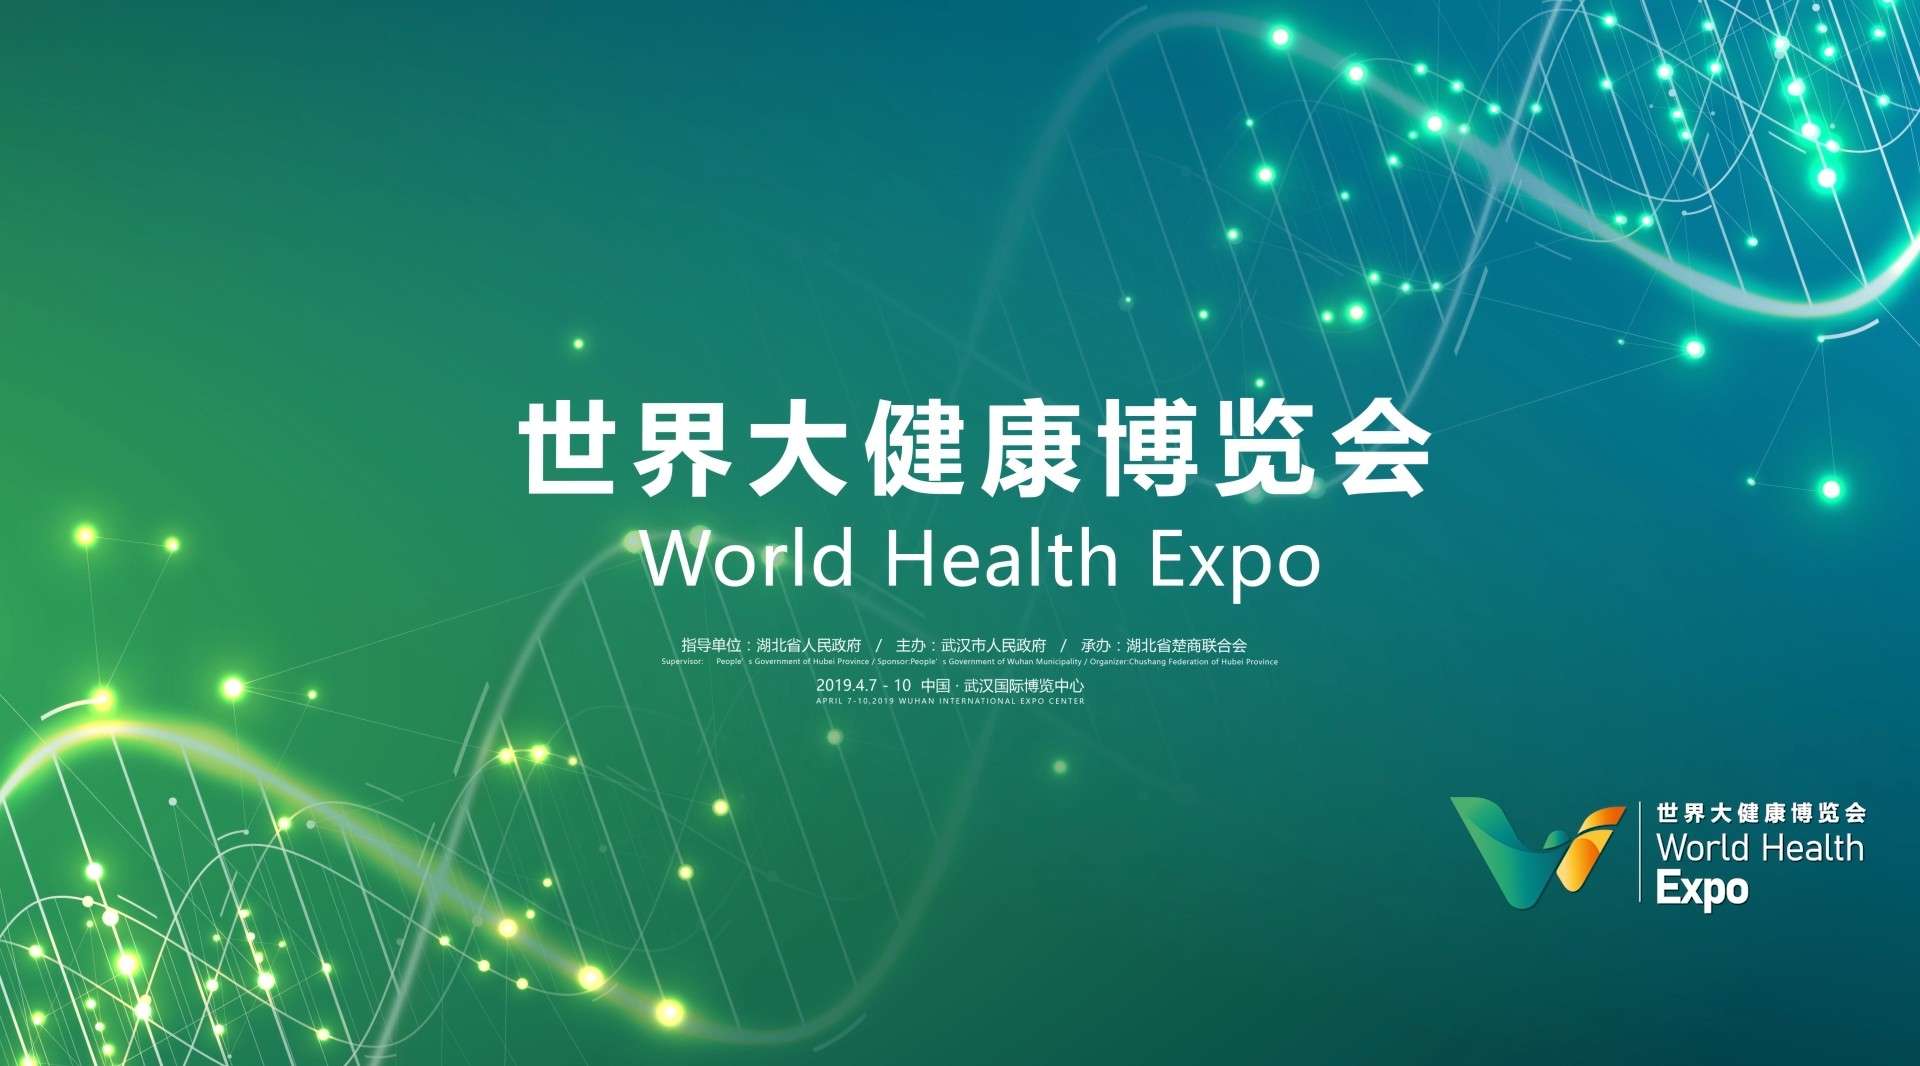 WHE世界大健康博览会现场宣传片《科技引领、健康未来》